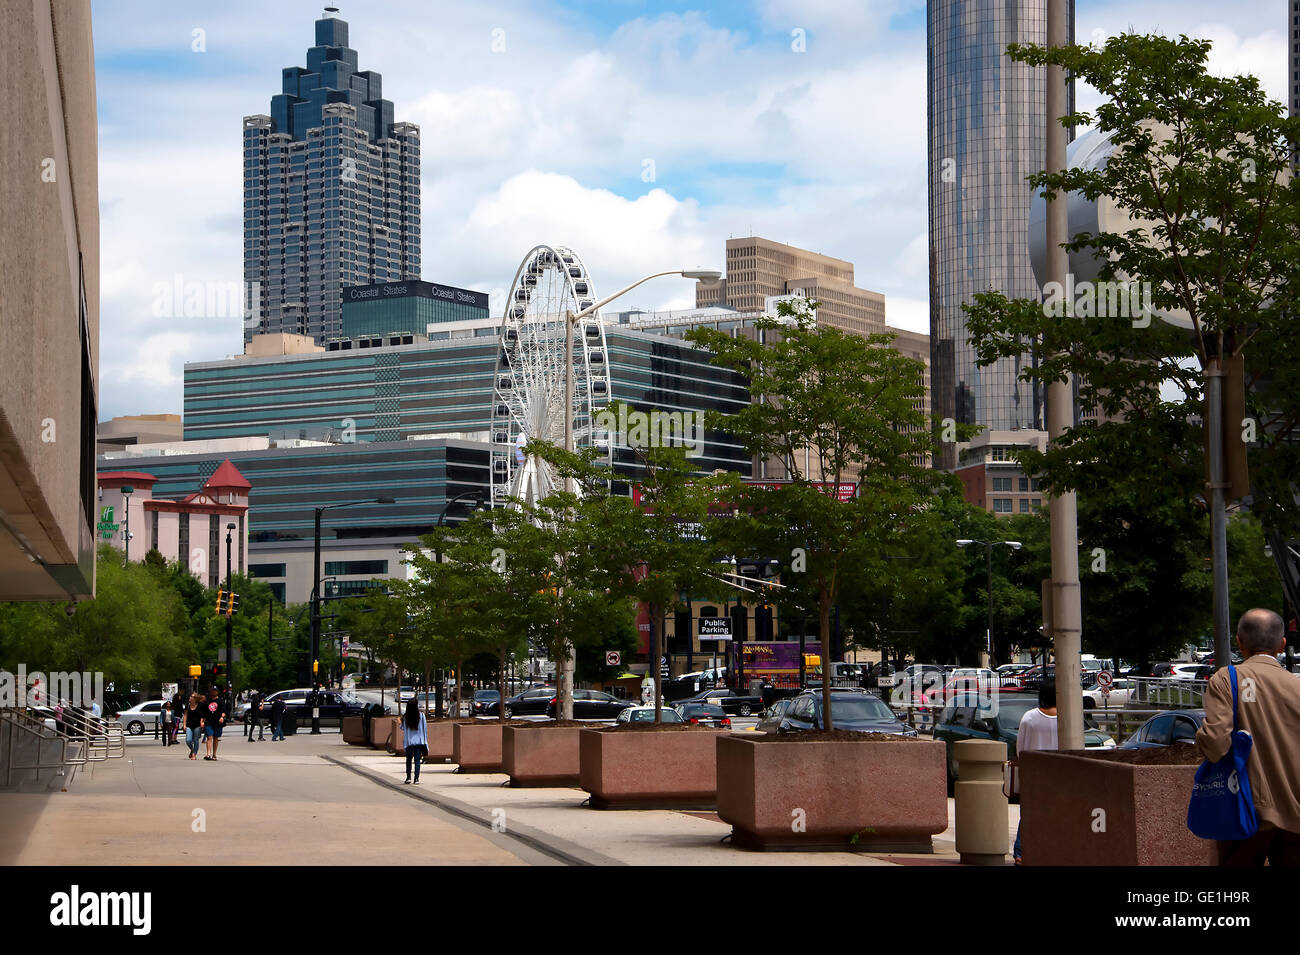 The Skyline of the city of Atlanta Georgia In the USA Stock Photo